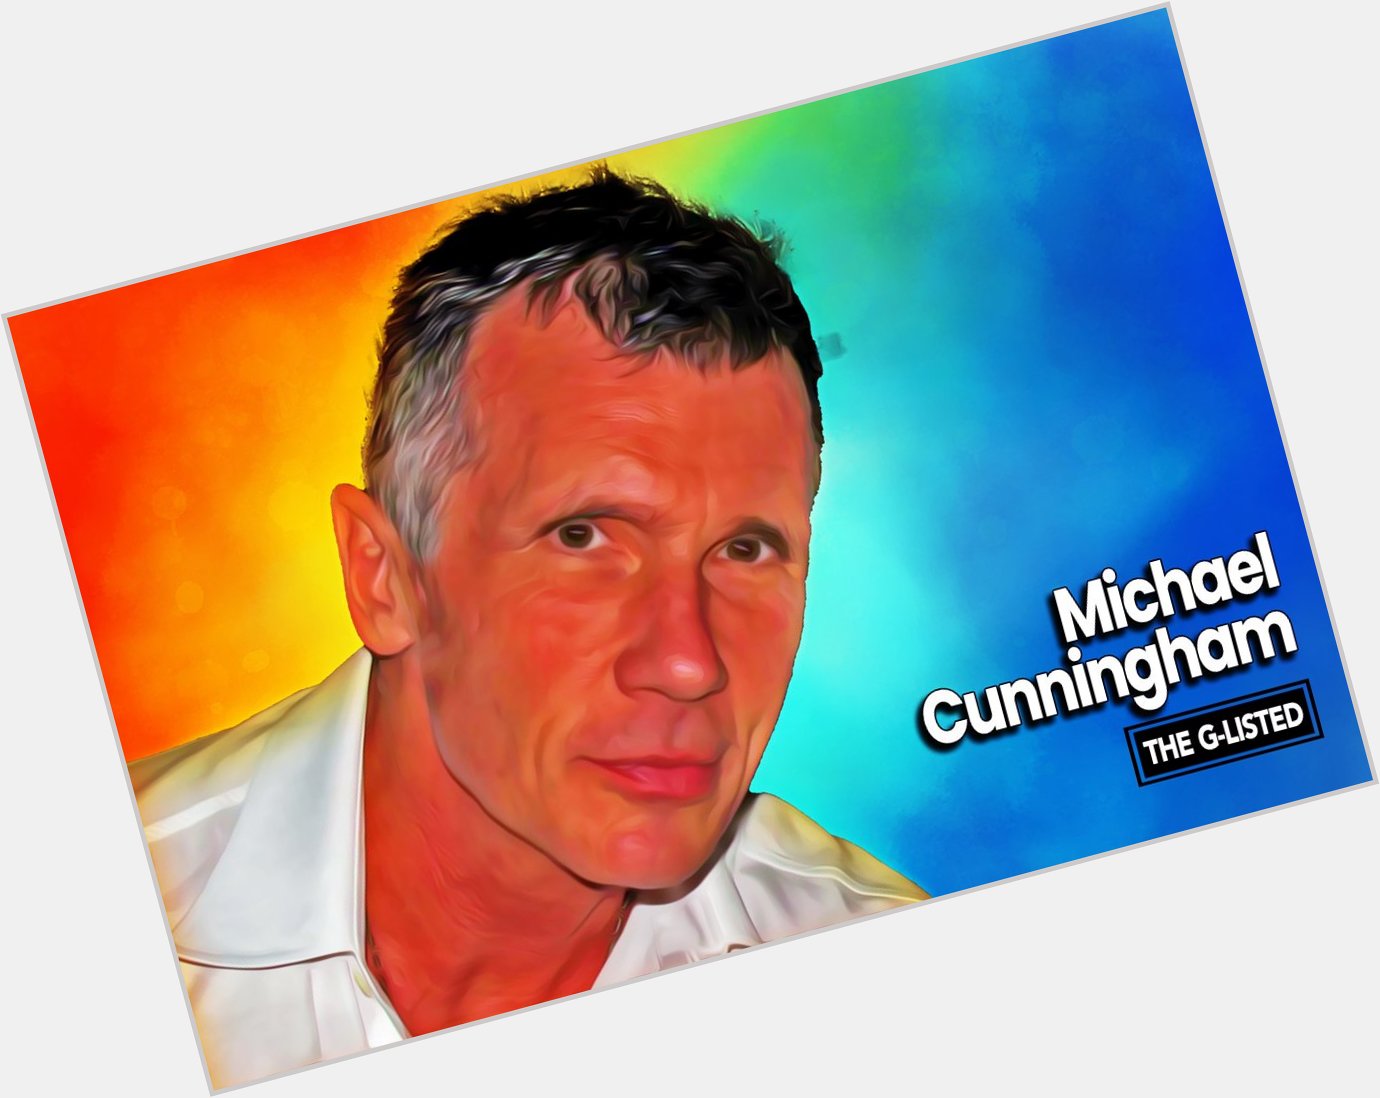 Happy birthday to novelist Michael Cunningham! 